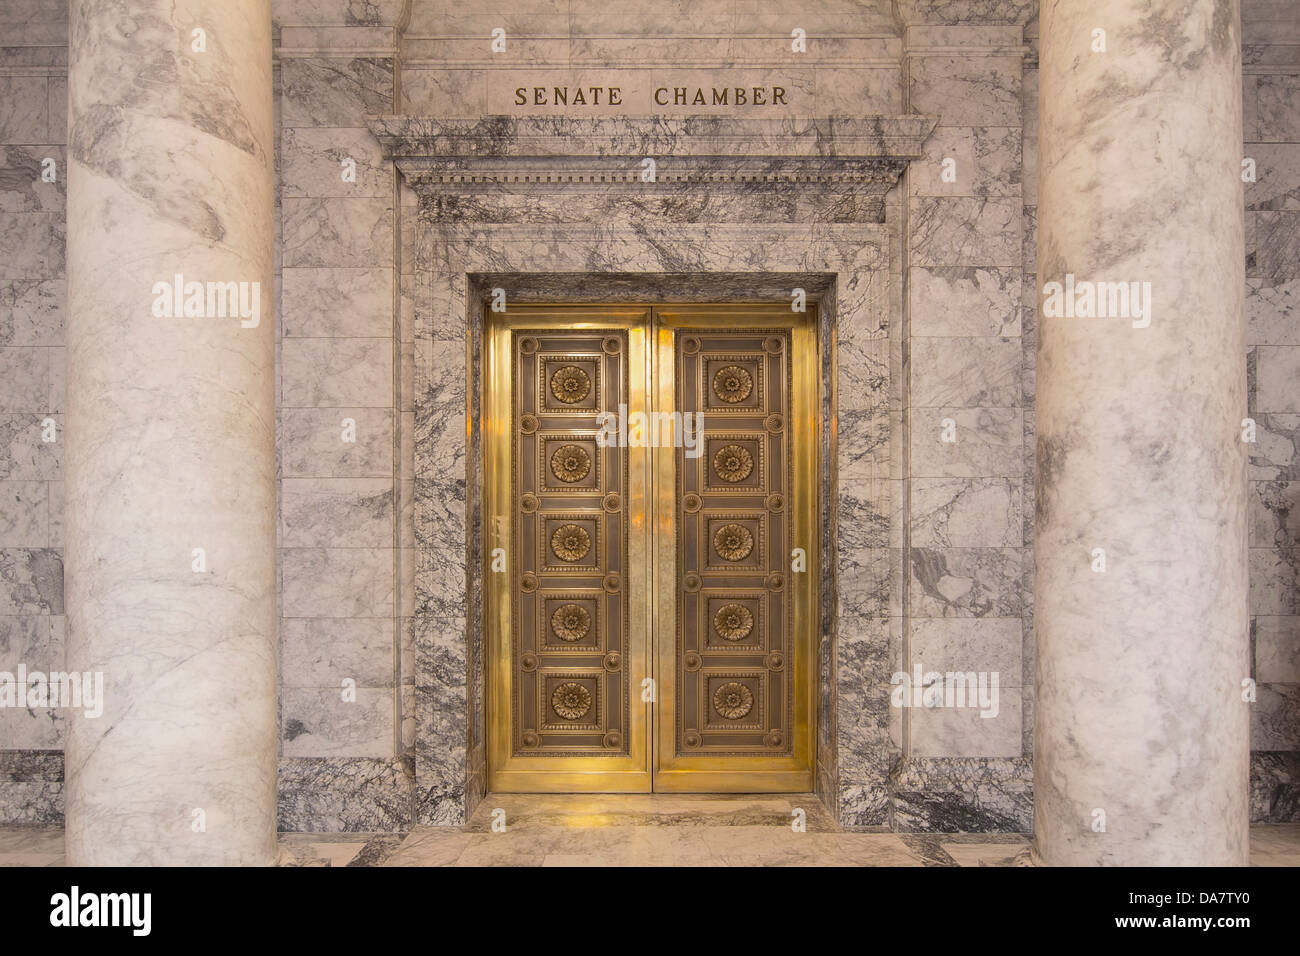 Washington State Capitol Building Senate Chamber Bronze Doors in Olympia Stock Photo